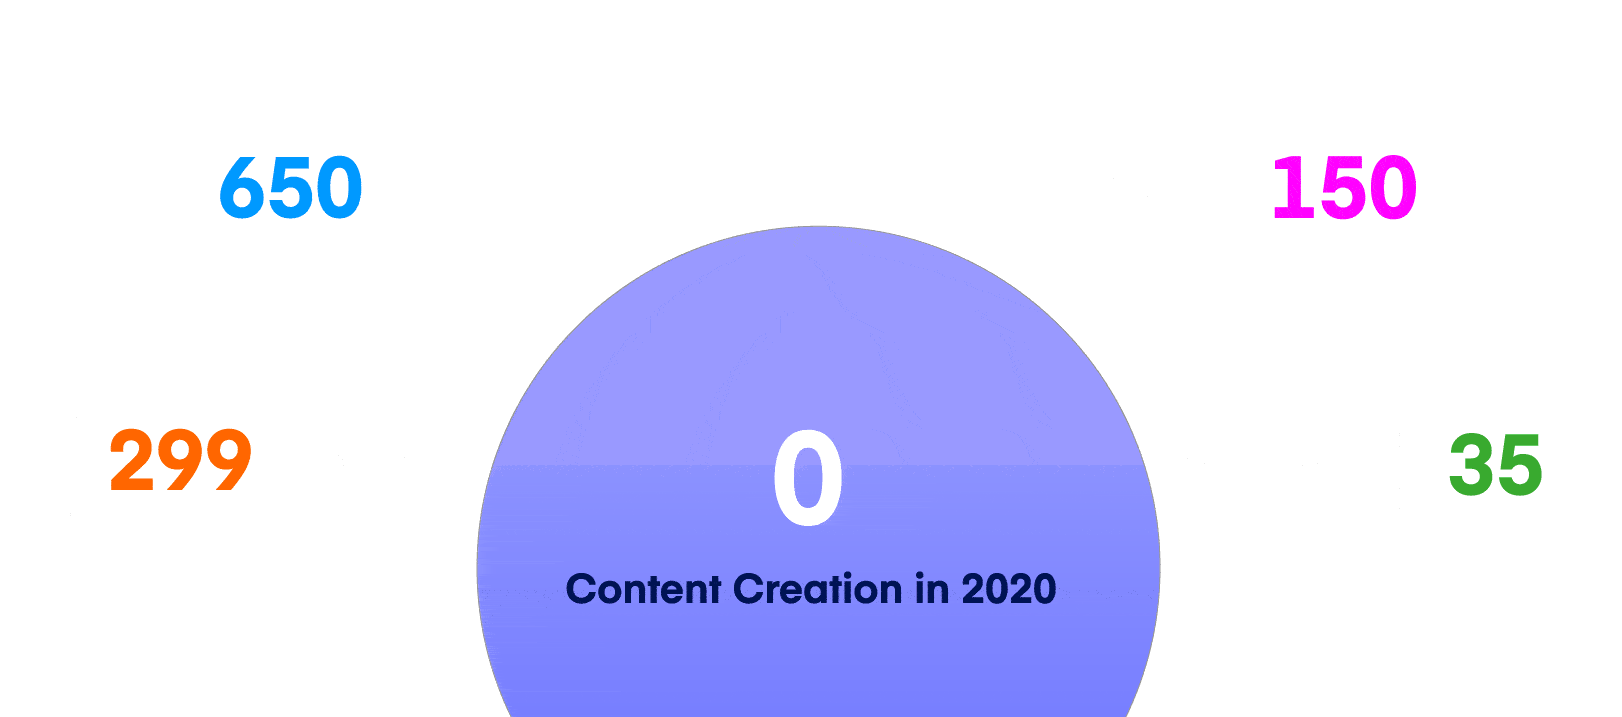 weDevs content creation in 2020